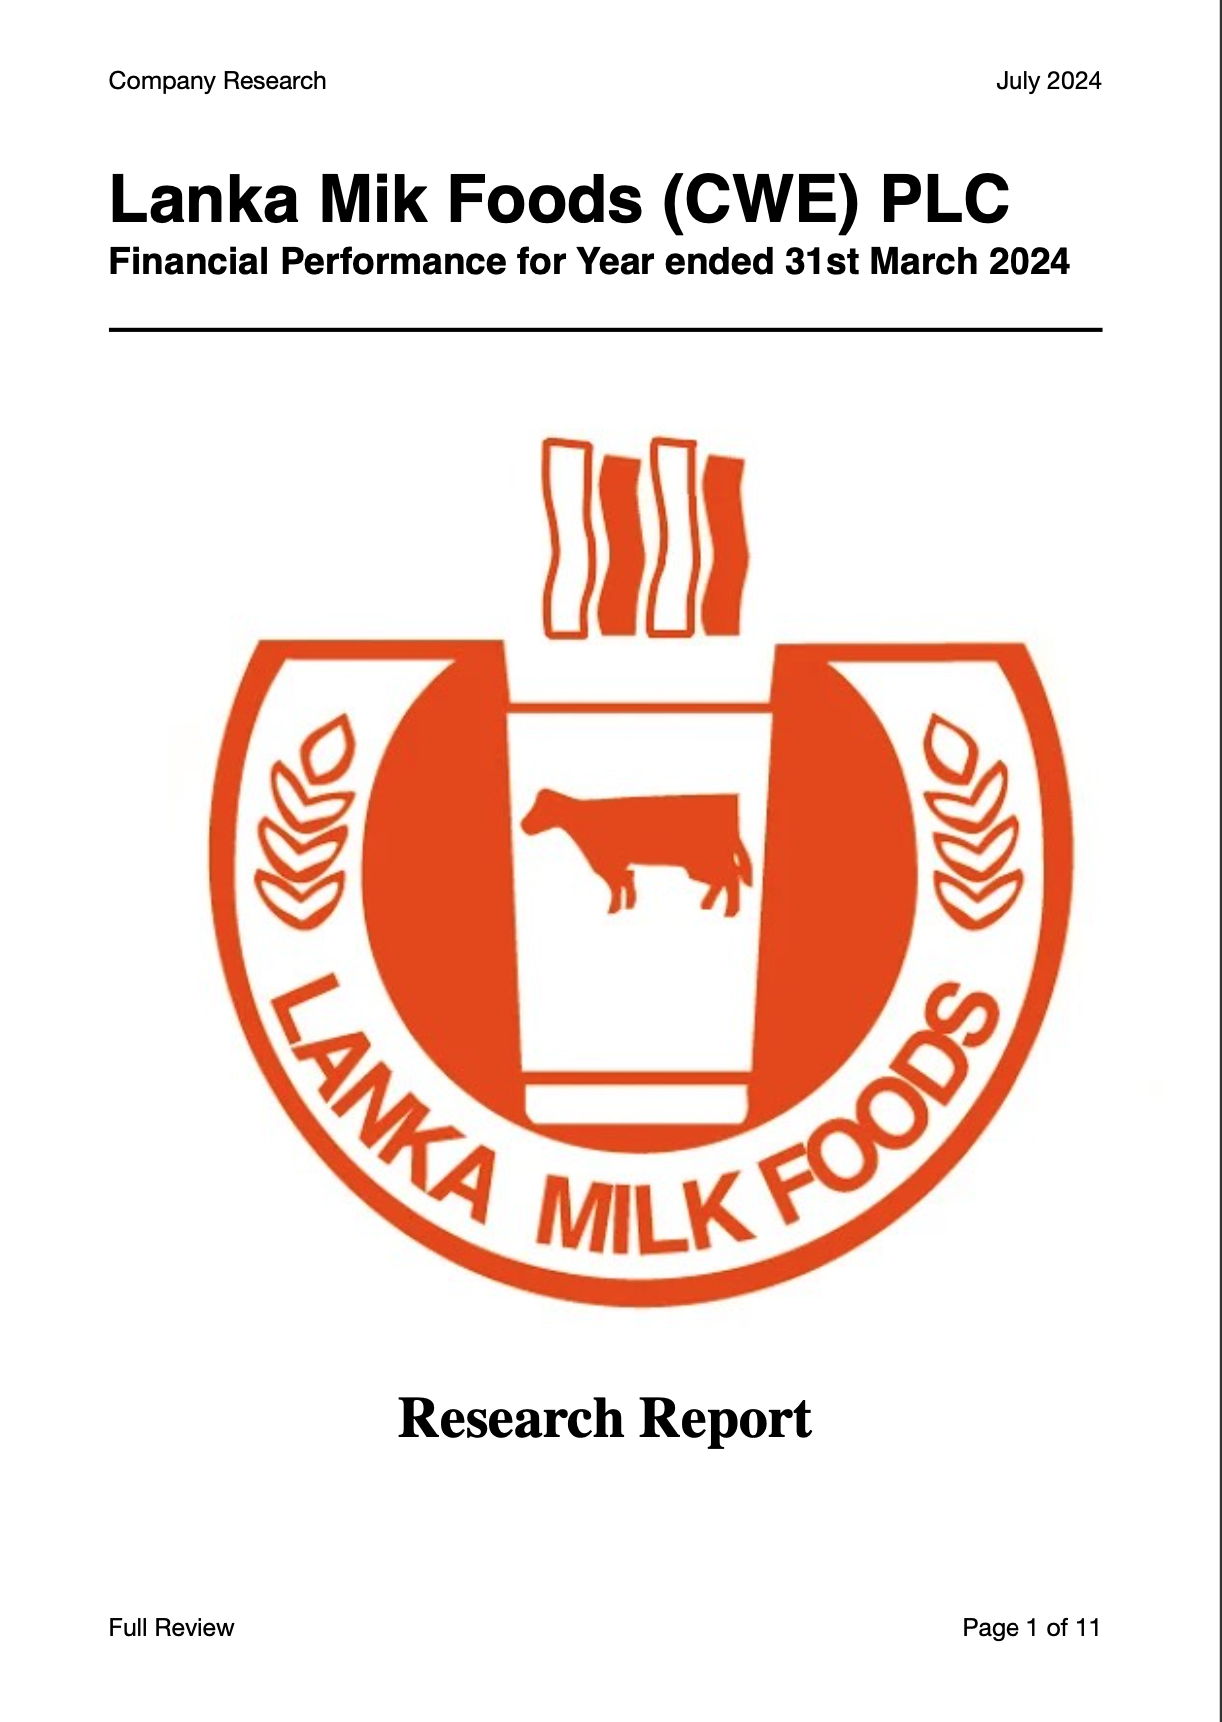 Lanka Milk Foods PLC: Rising Costs overshadows profitability